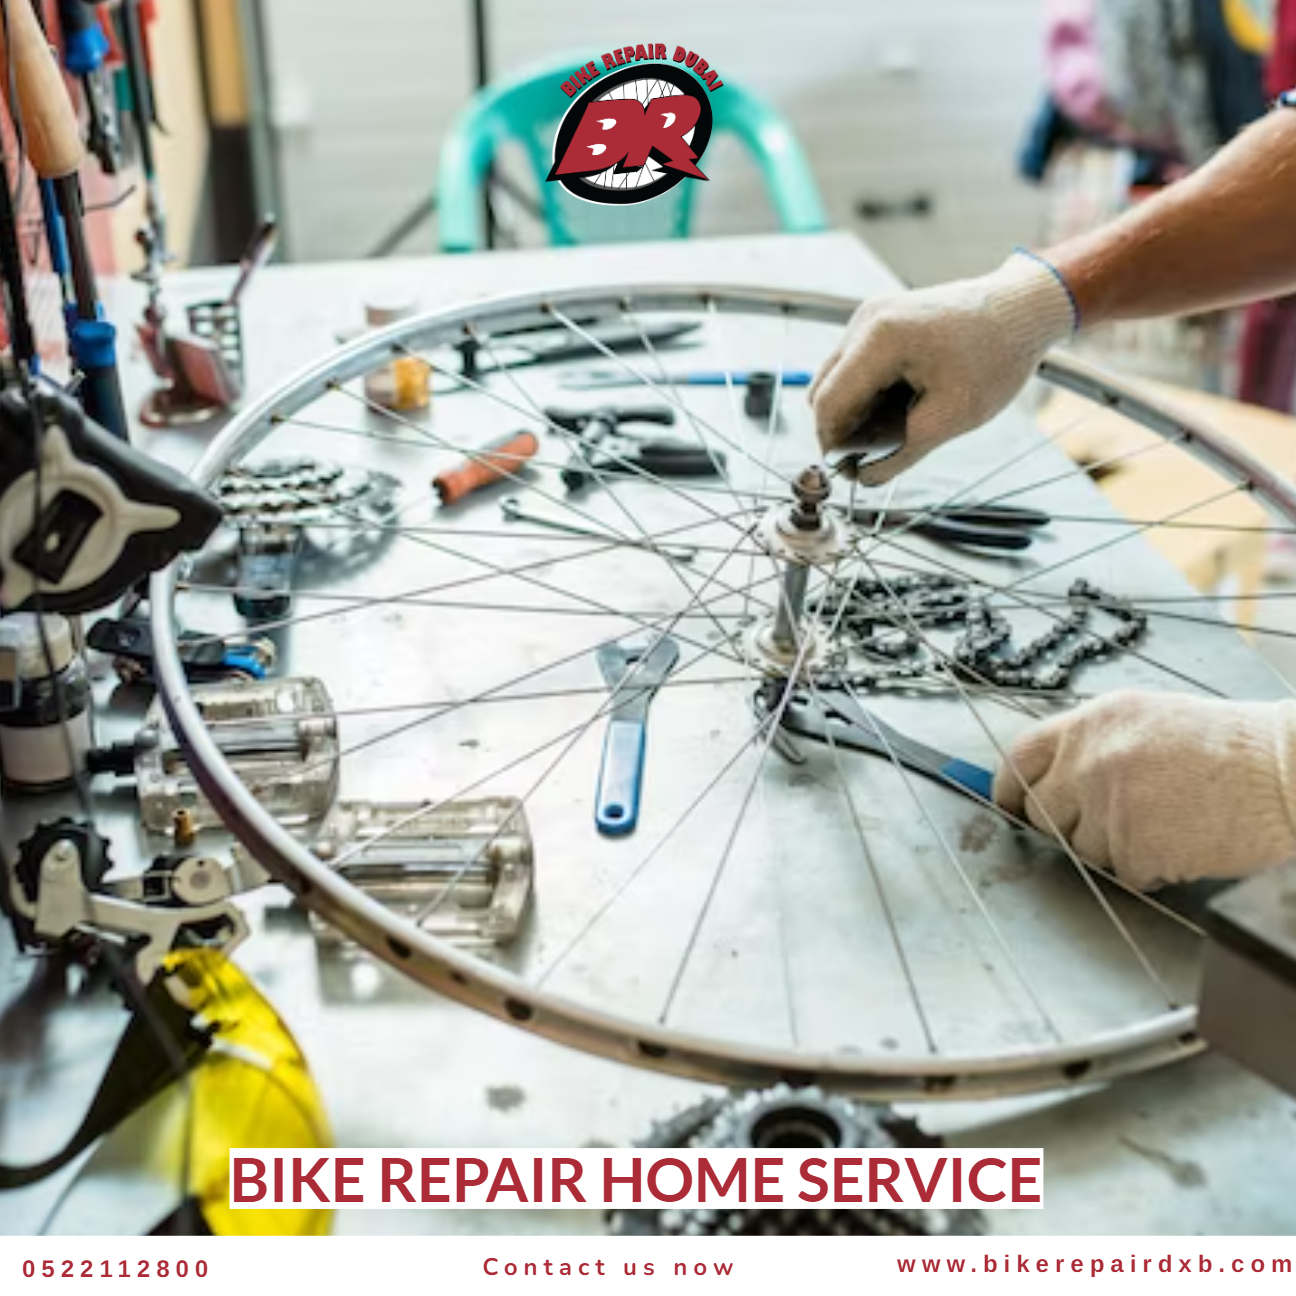 Bike repair home service